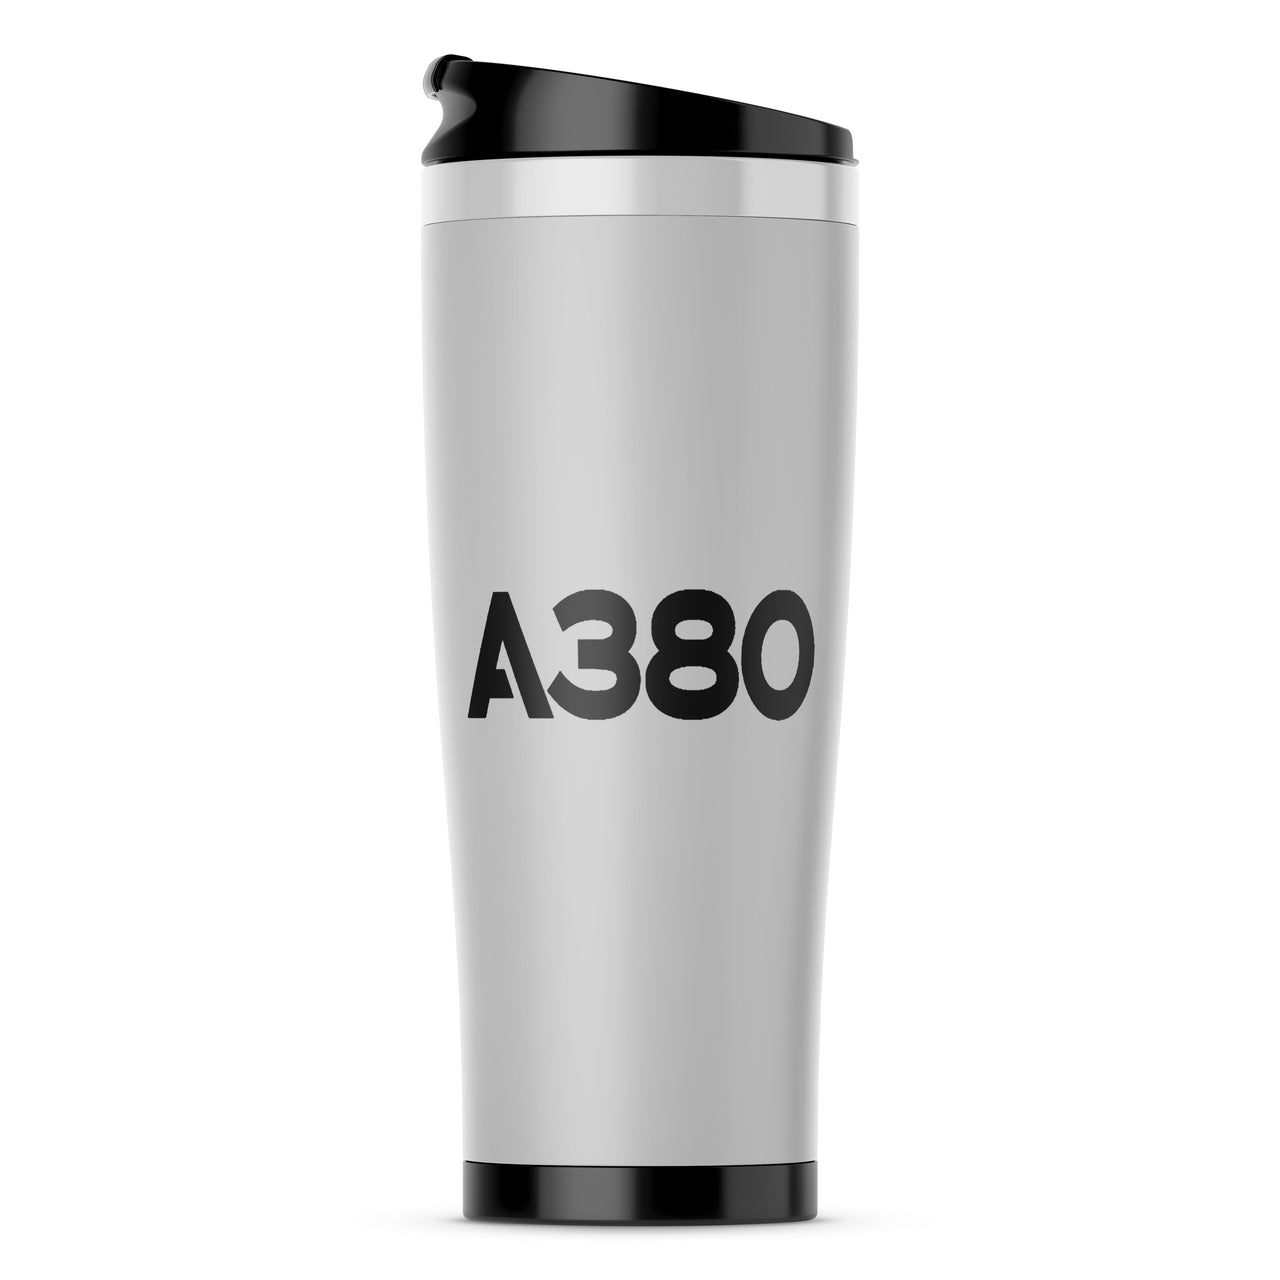 A380 Flat Text Designed Travel Mugs